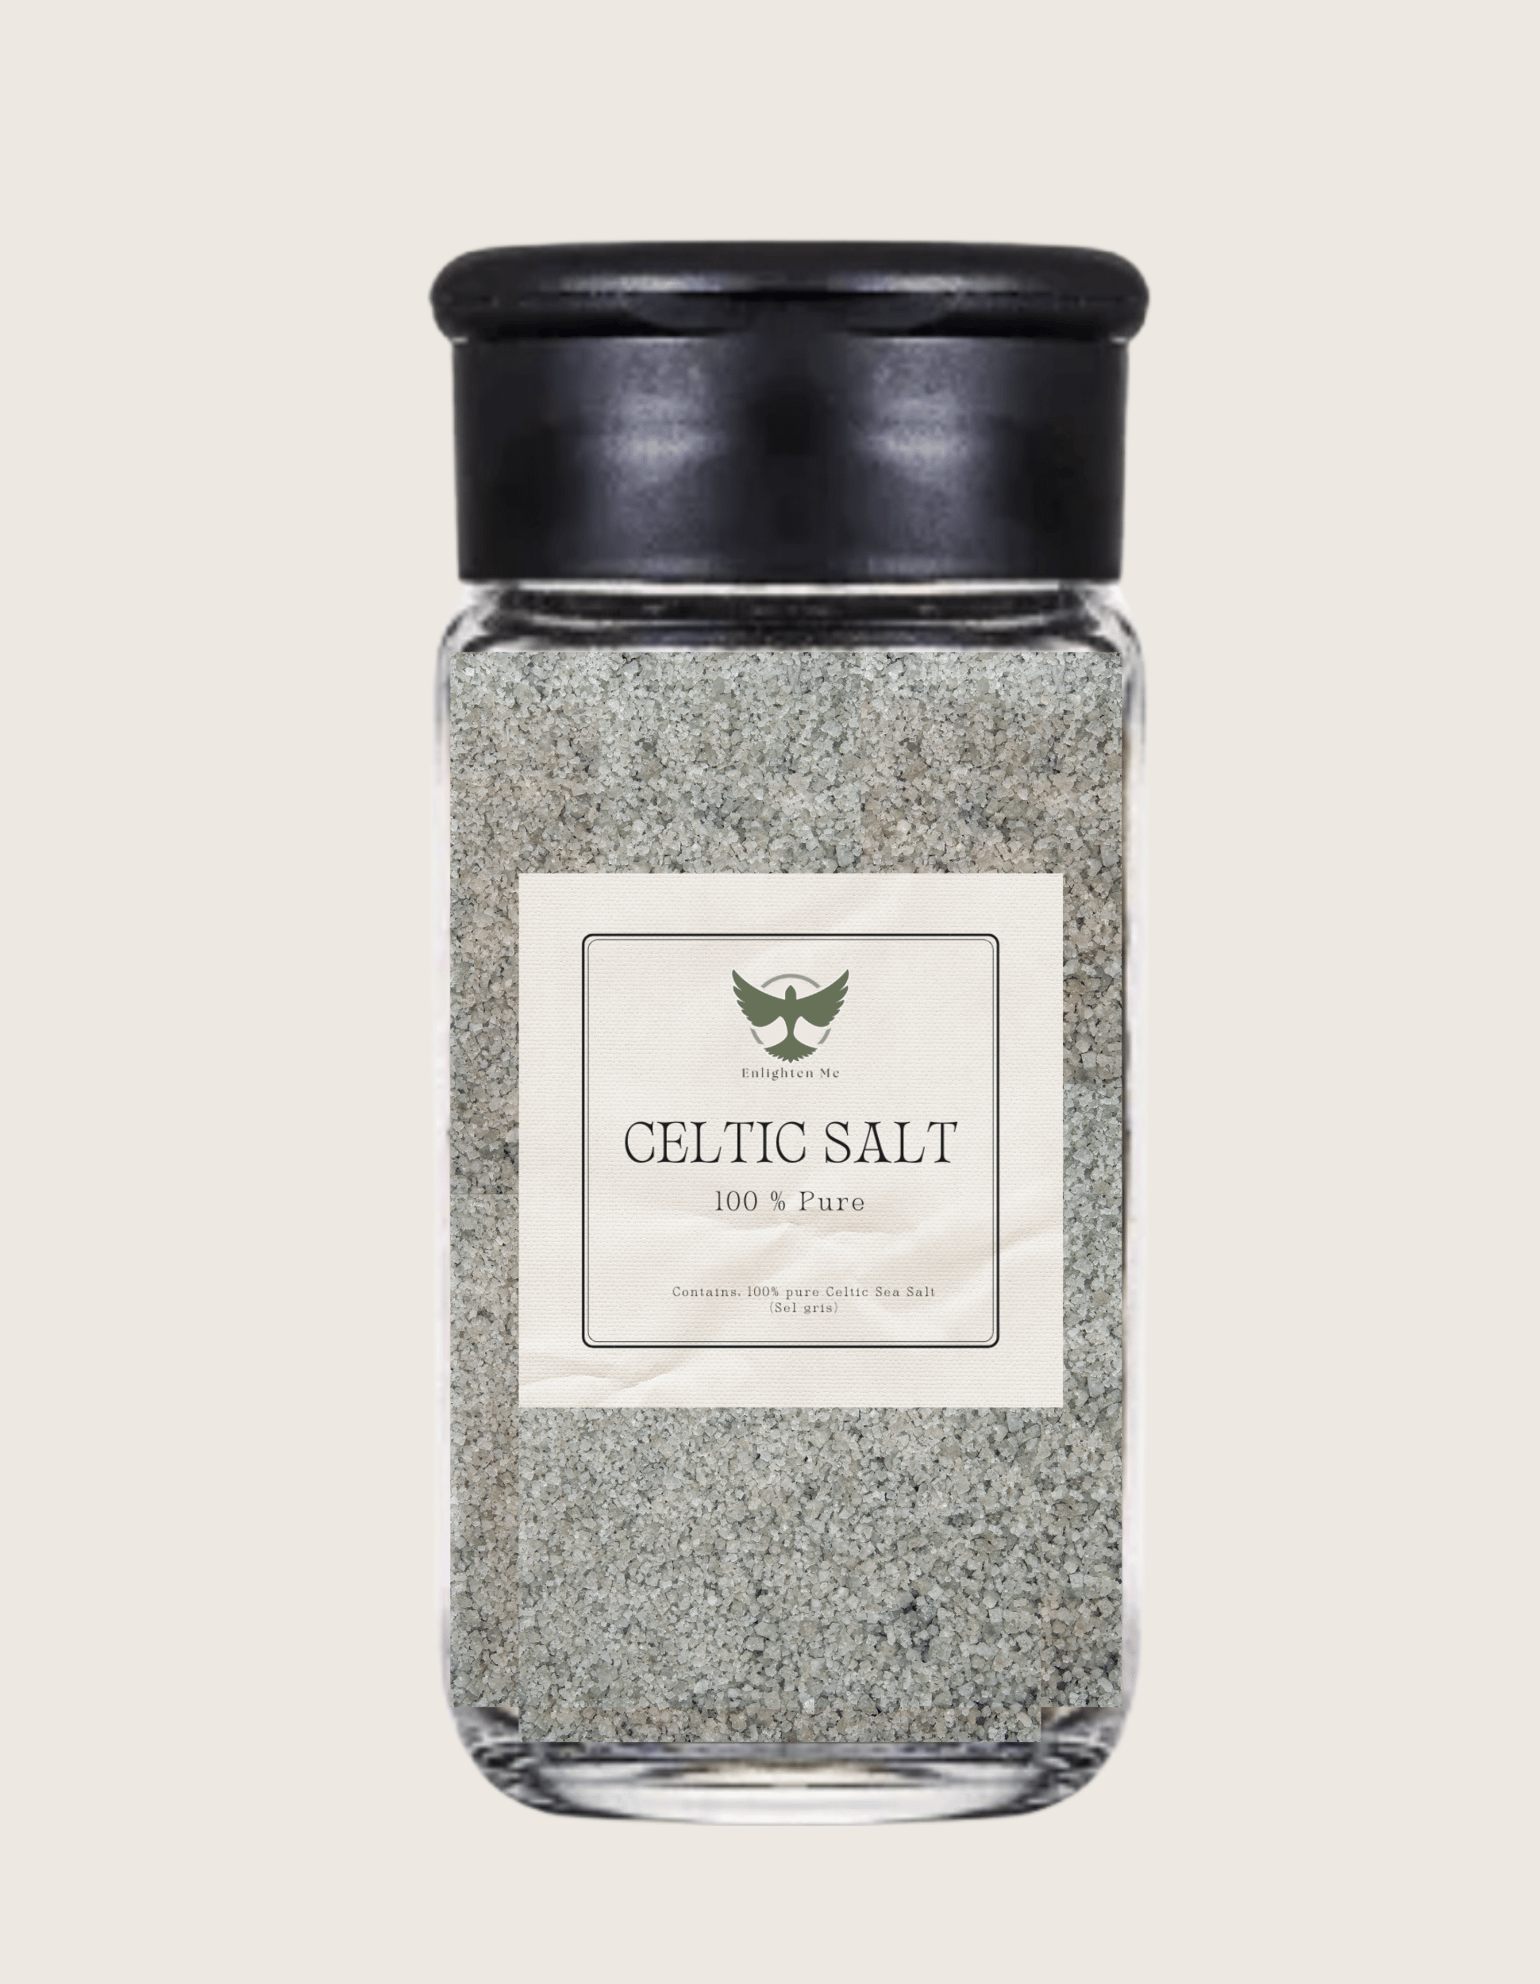 Celtic Sea Salt, fine, Zdravnitza, 500 g